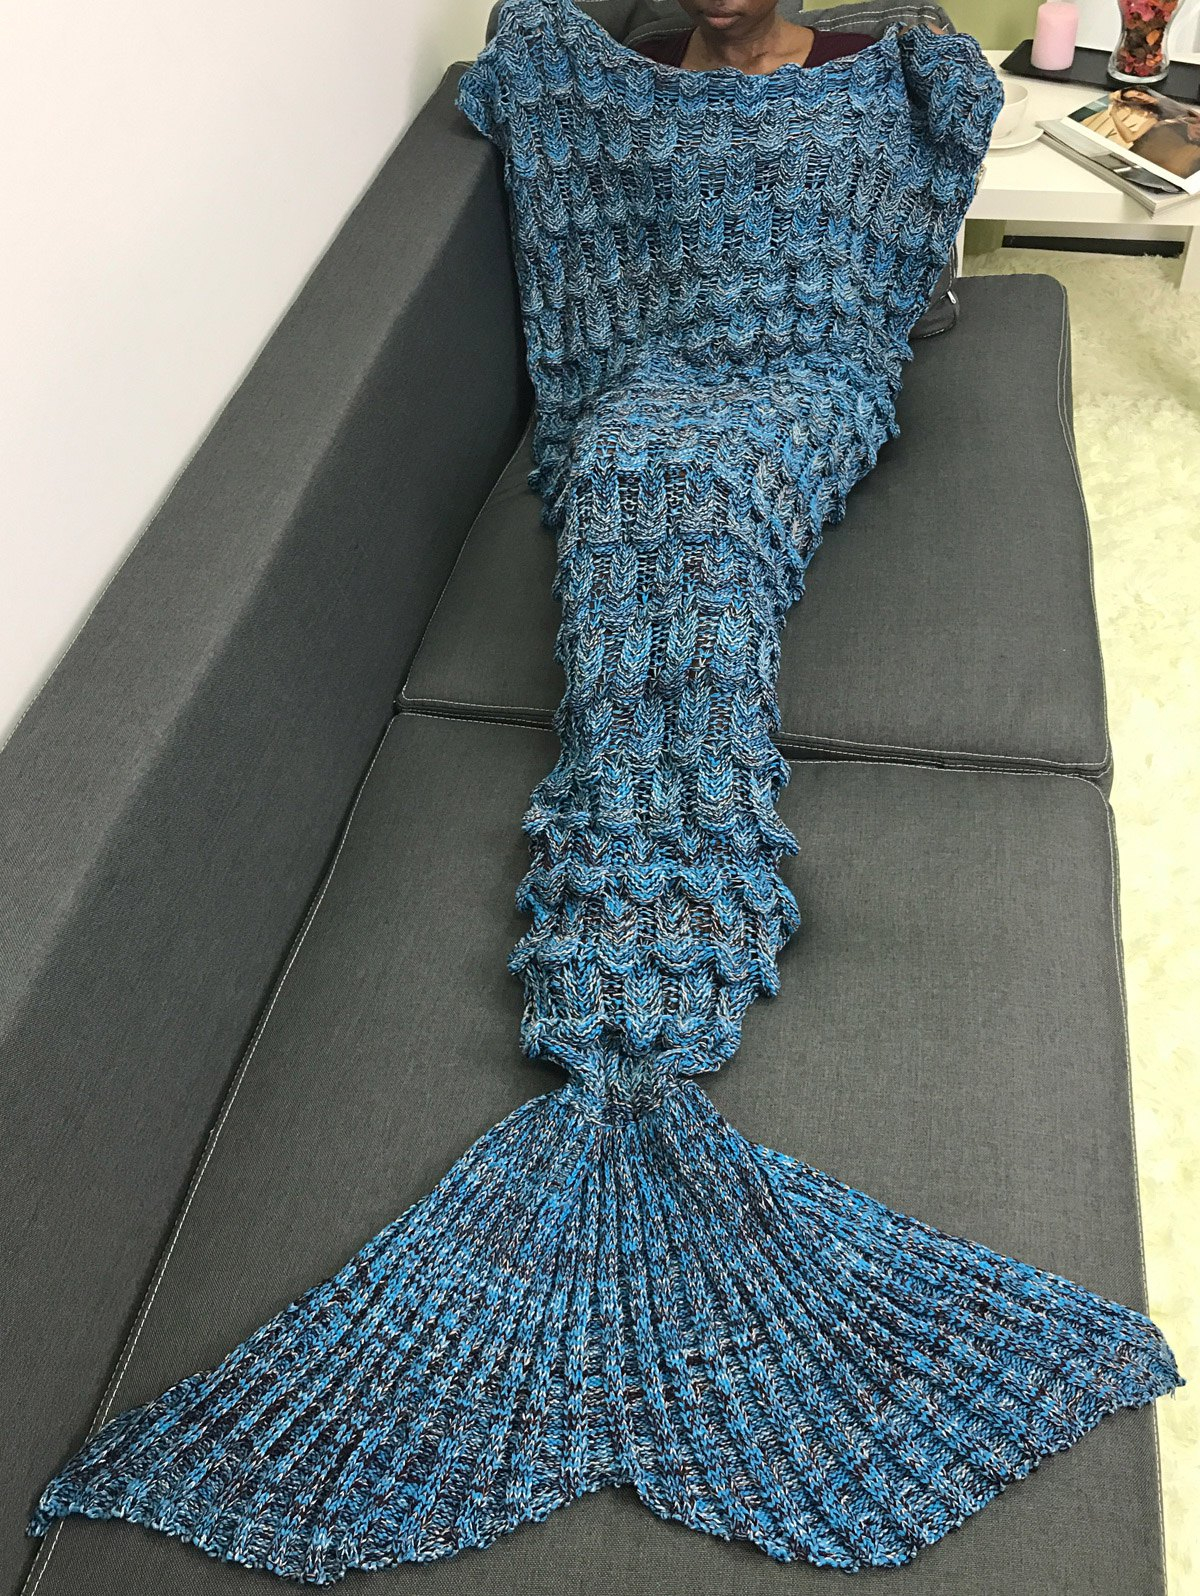 Fish Knitting Pattern Free Knitting Fish Scales Design Mermaid Tail Style Blanket Royal